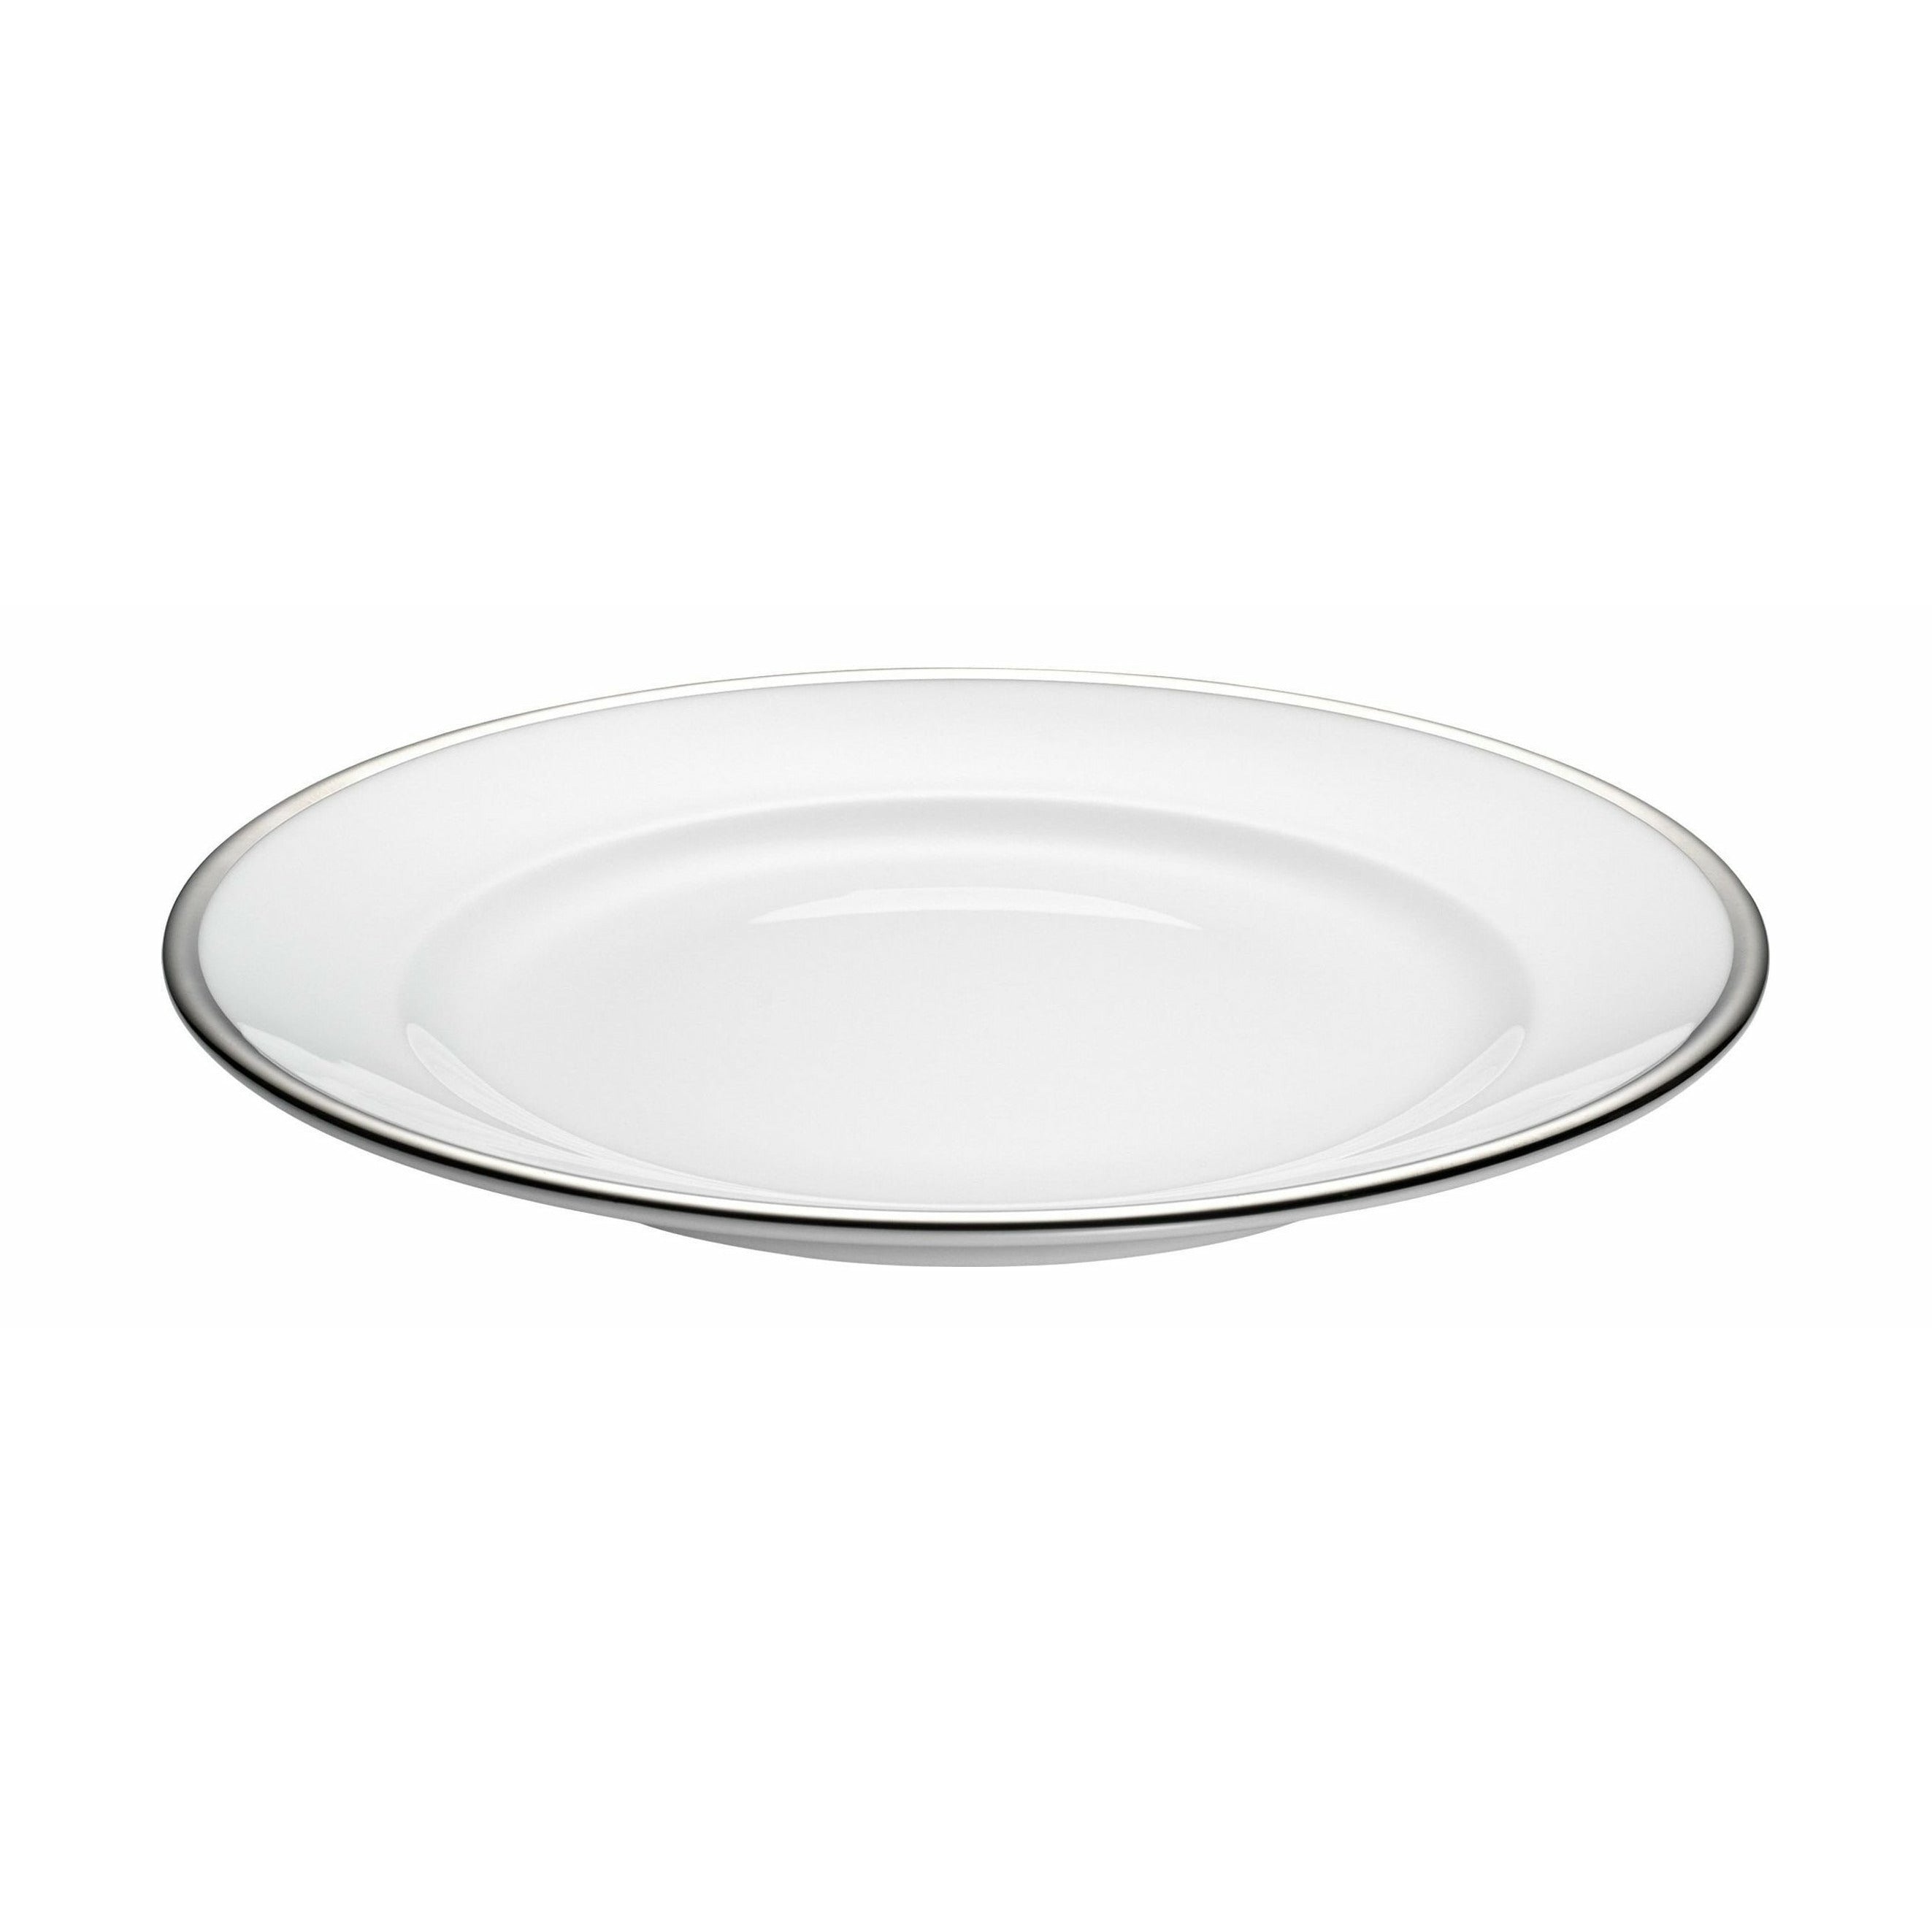 Pillivuyt Bistro Plate ø 24 Cm, White/Silver